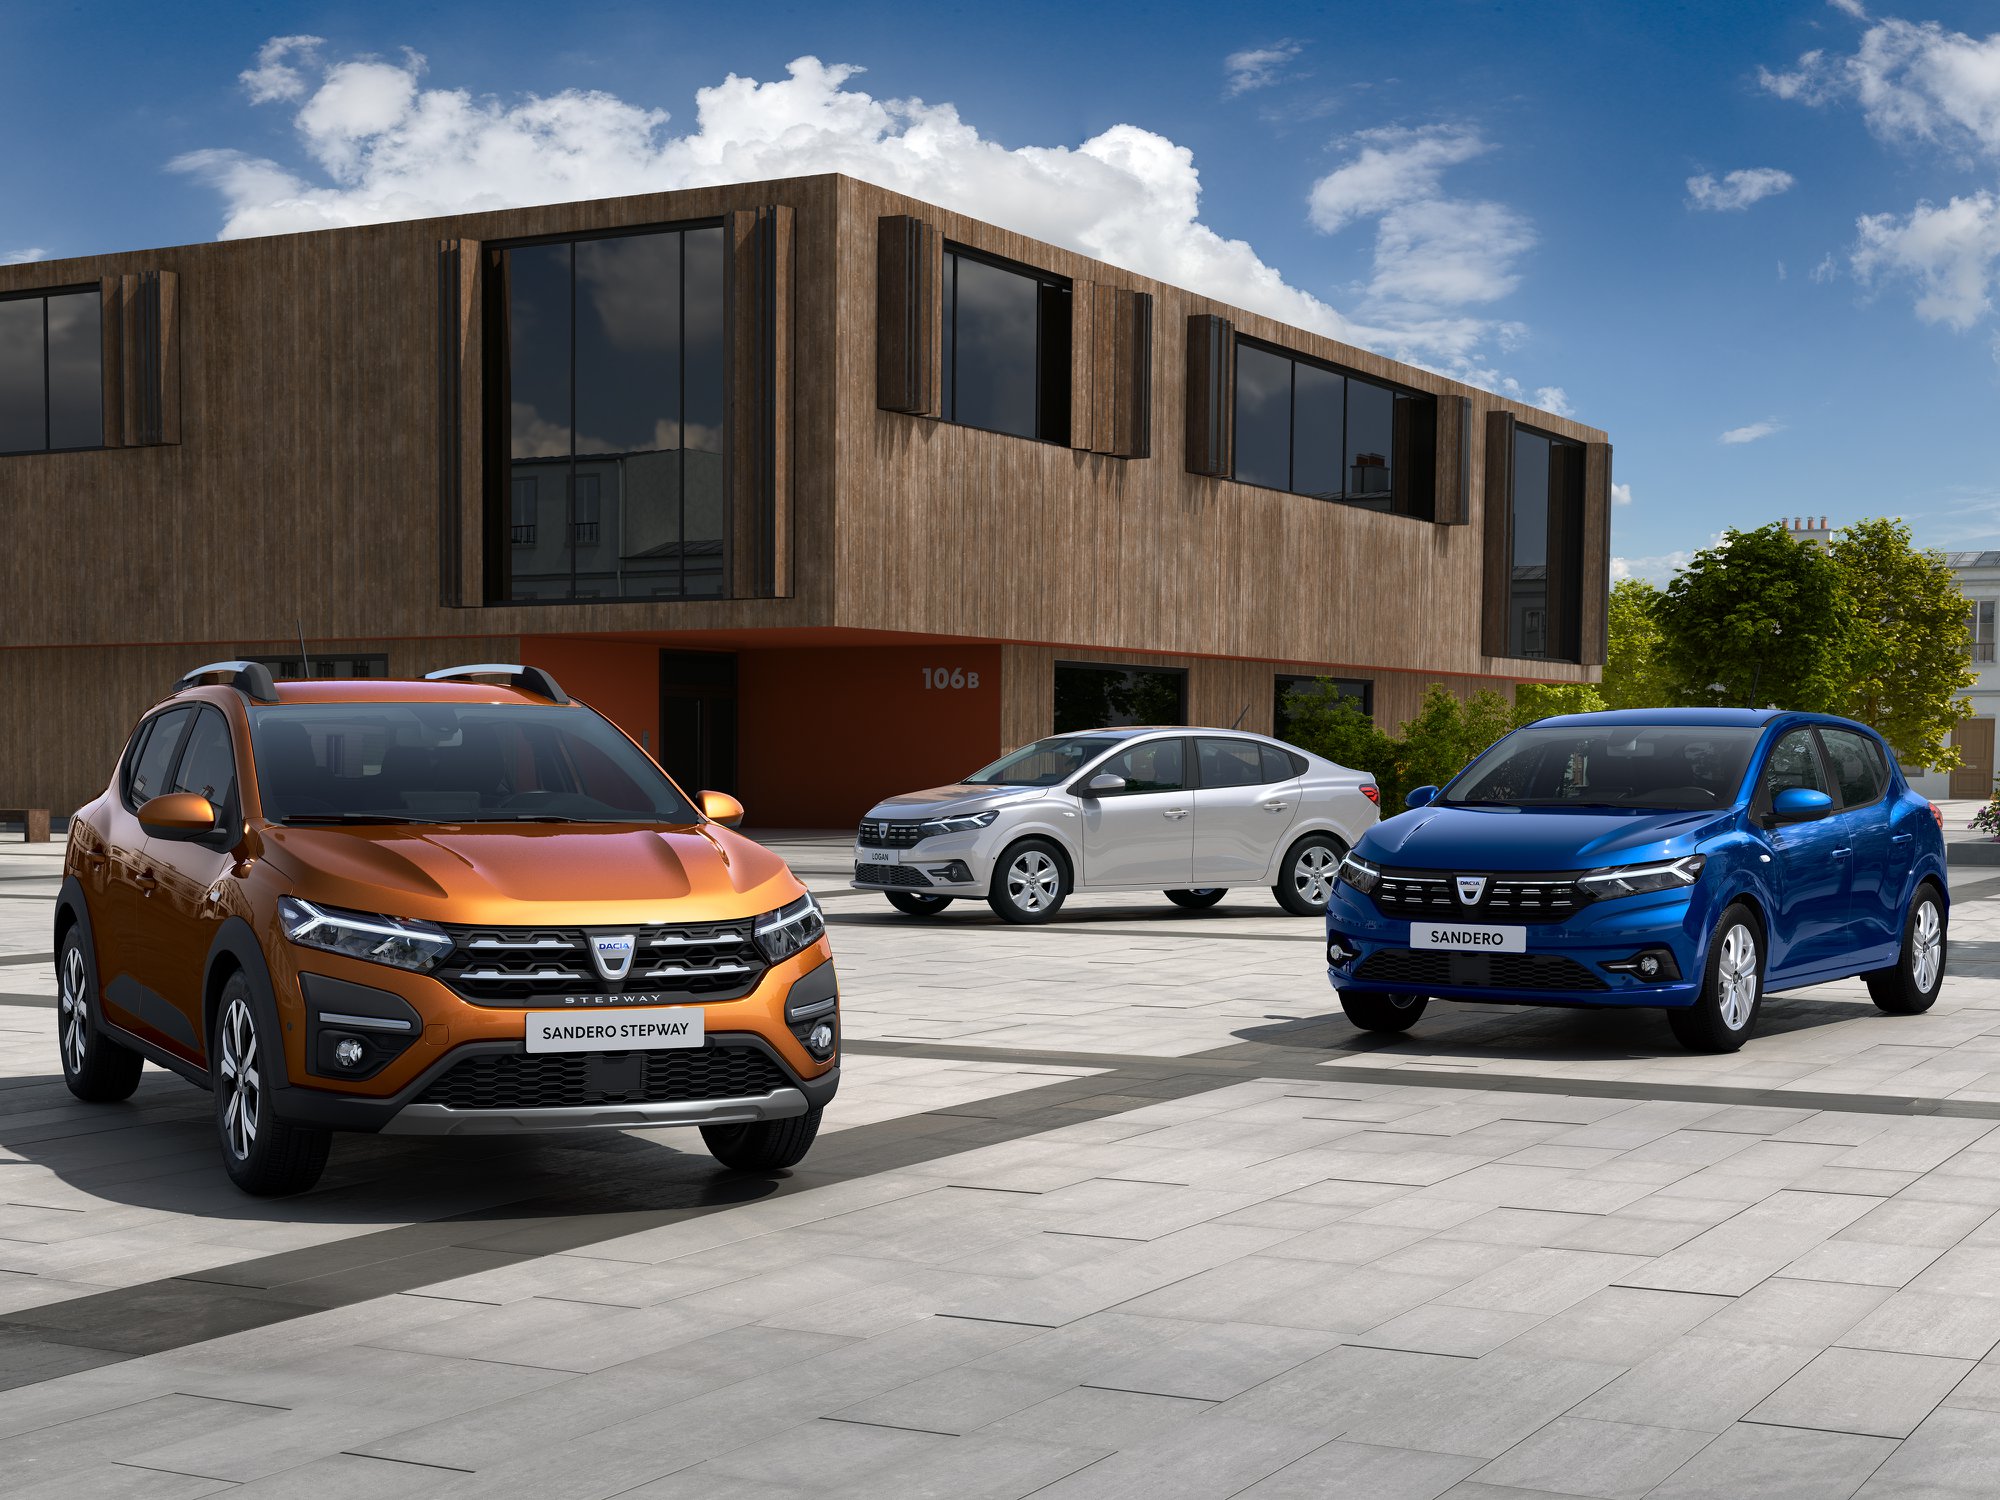 FOTO Dacia a publicat imagini cu noile modele Logan, Sandero și Stepway